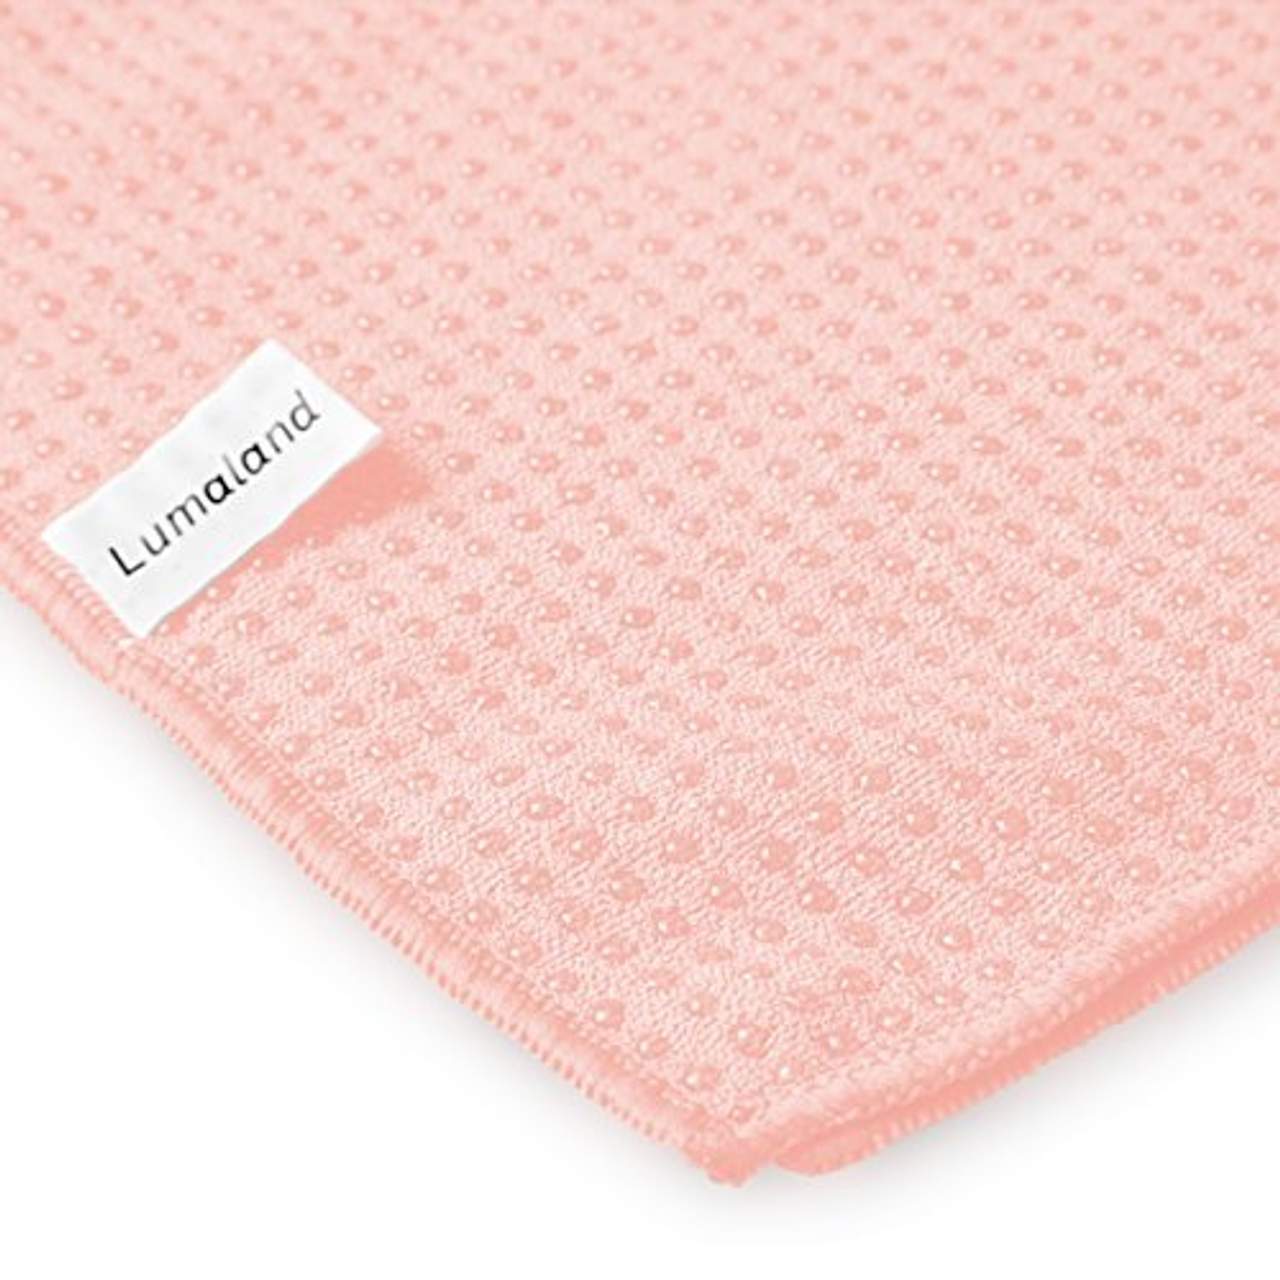 Lumaland Premium Mikrofaser Yoga Handtuch